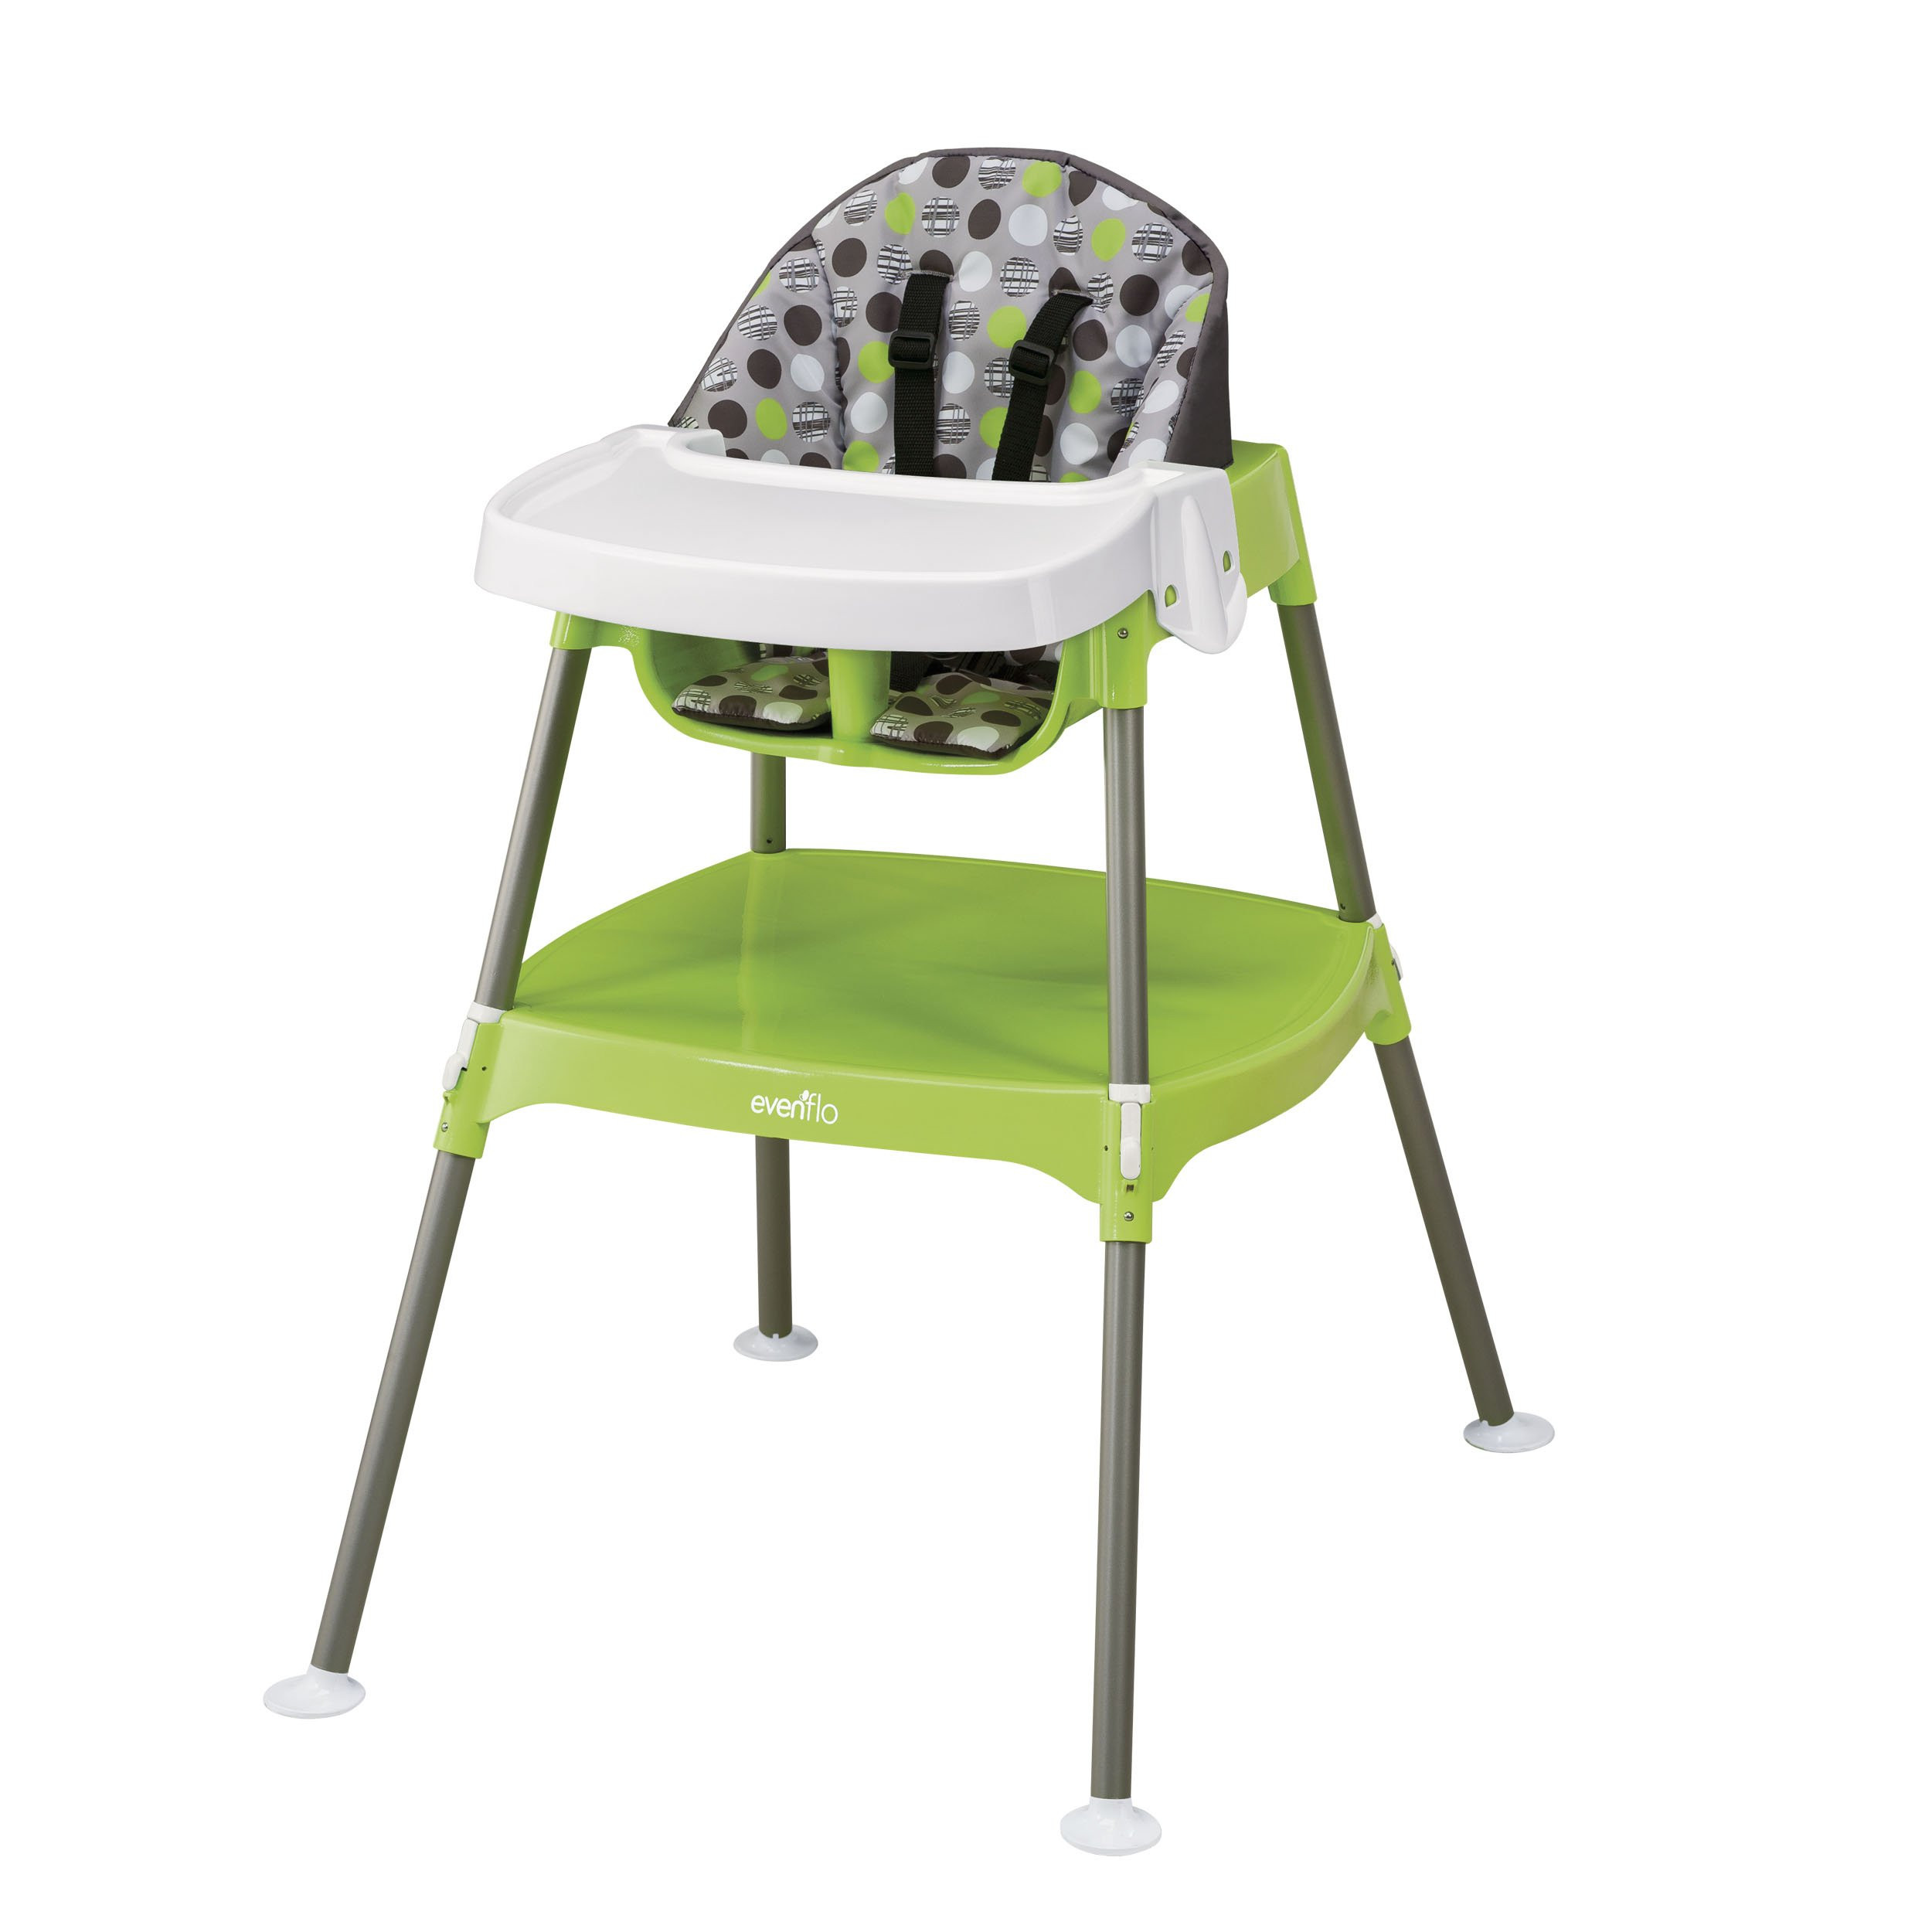 Best ideas about Evenflo Convertible High Chair
. Save or Pin Amazon Evenflo Convertible High Chair Dottie Rose Now.